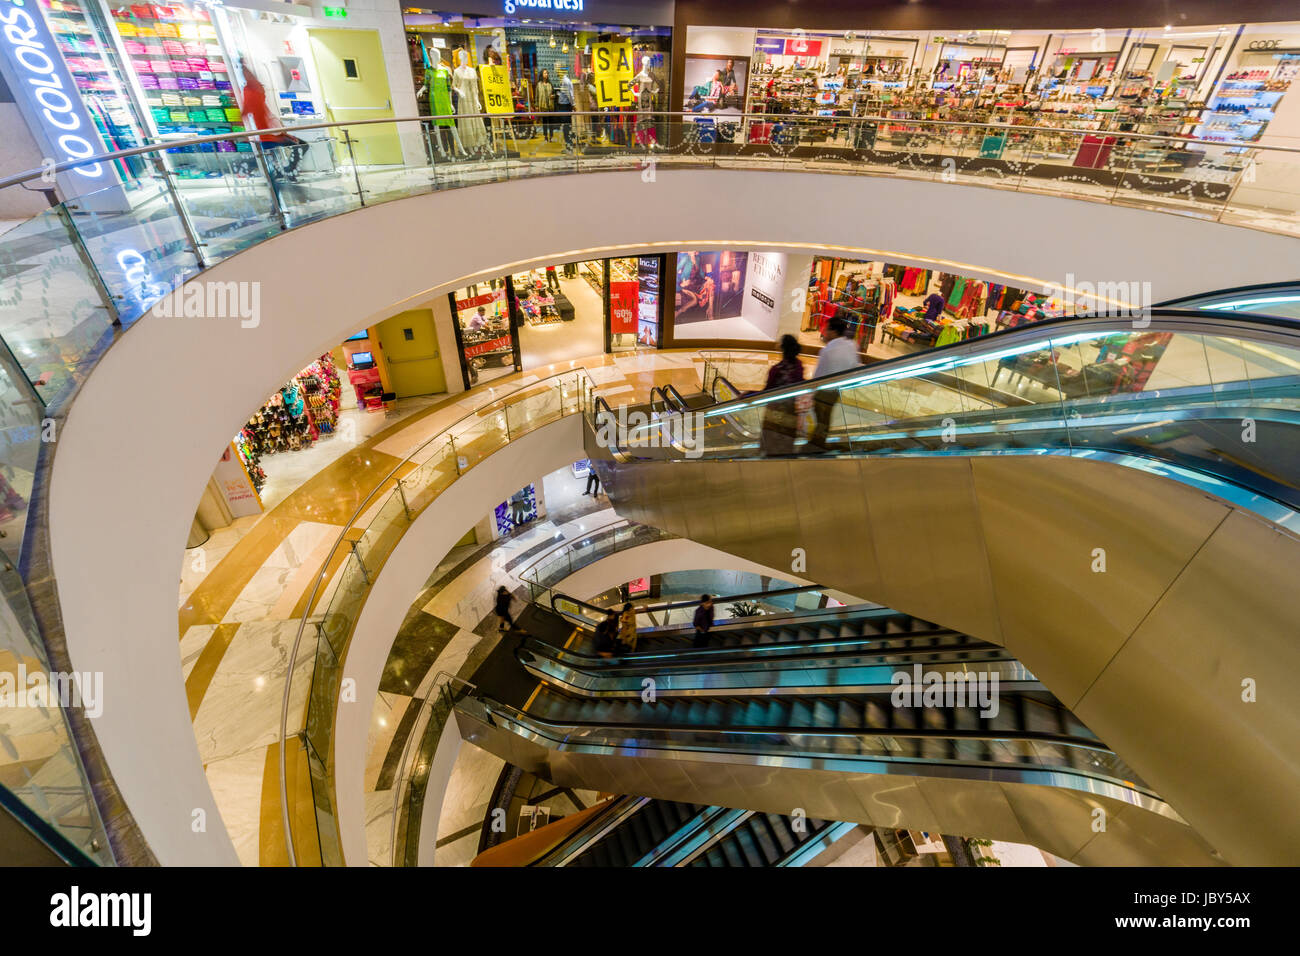 Im Inneren Fahrtreppen, Rolltreppen, des Einkaufszentrums quest Mall Stockfoto